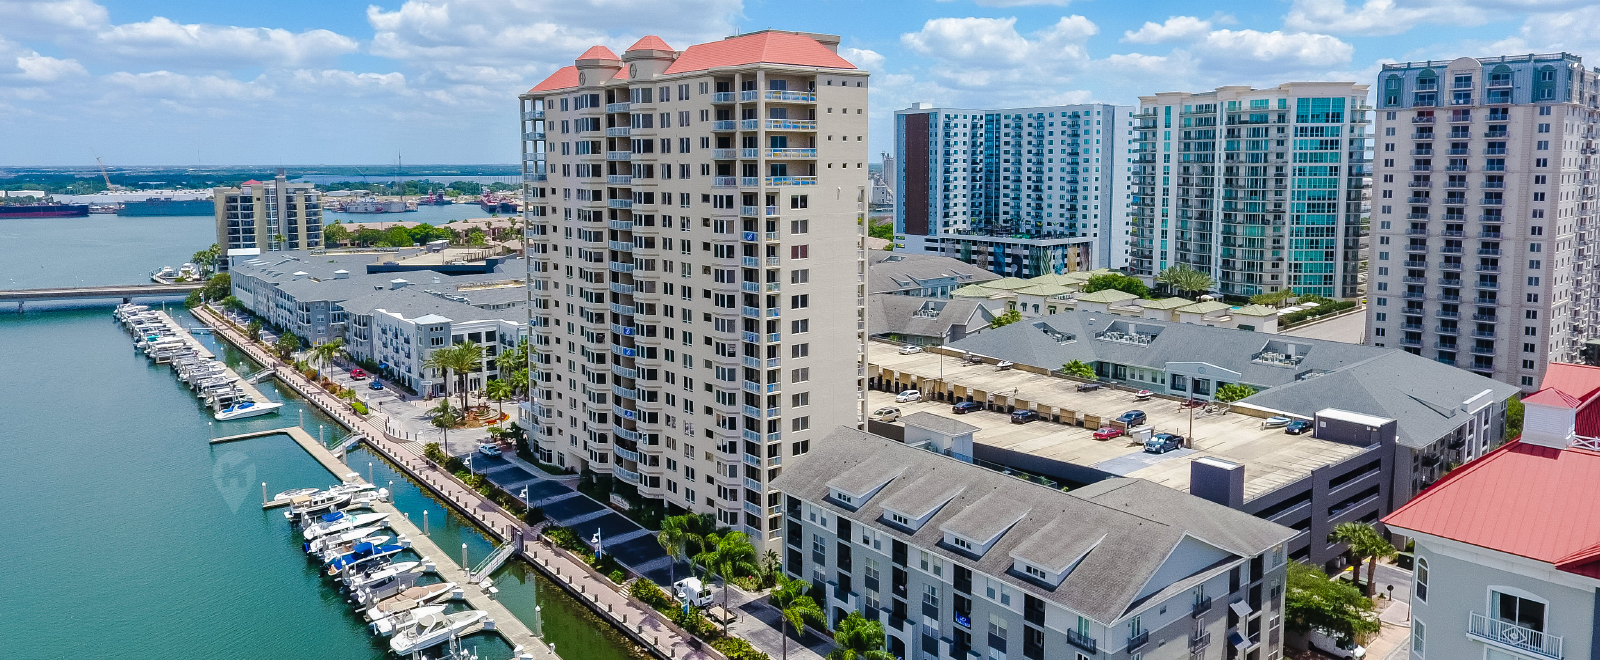 South Tampa Real Estate - July 2018